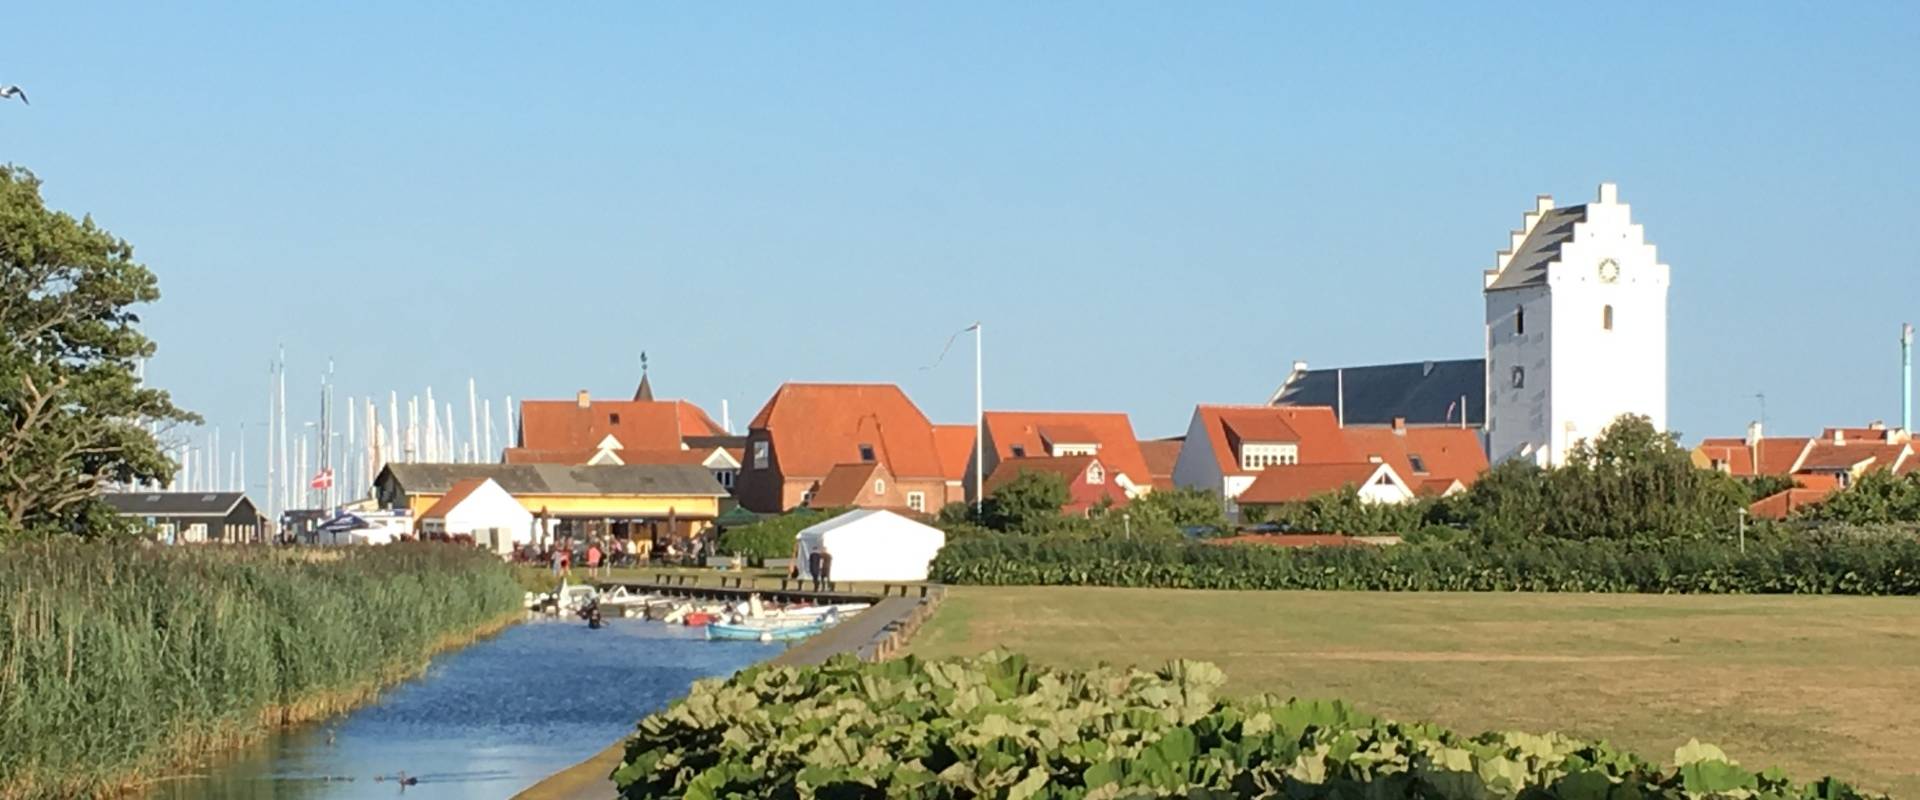 Sæby - miasteczko nad morzem. Część II. Sæby - a little town by the sea. Part II [PL/EN]